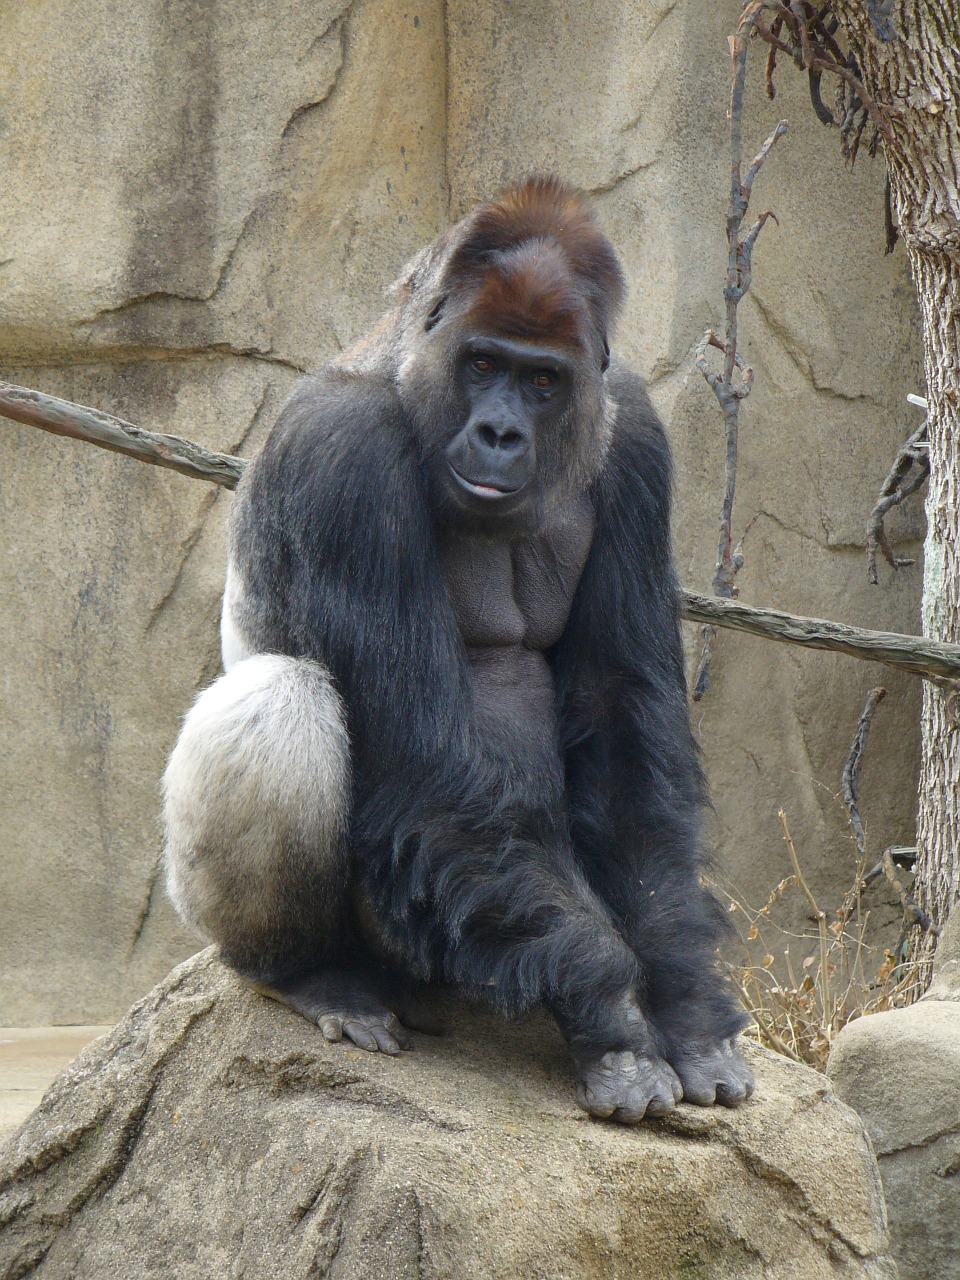 silver back gorilla zoo free photo